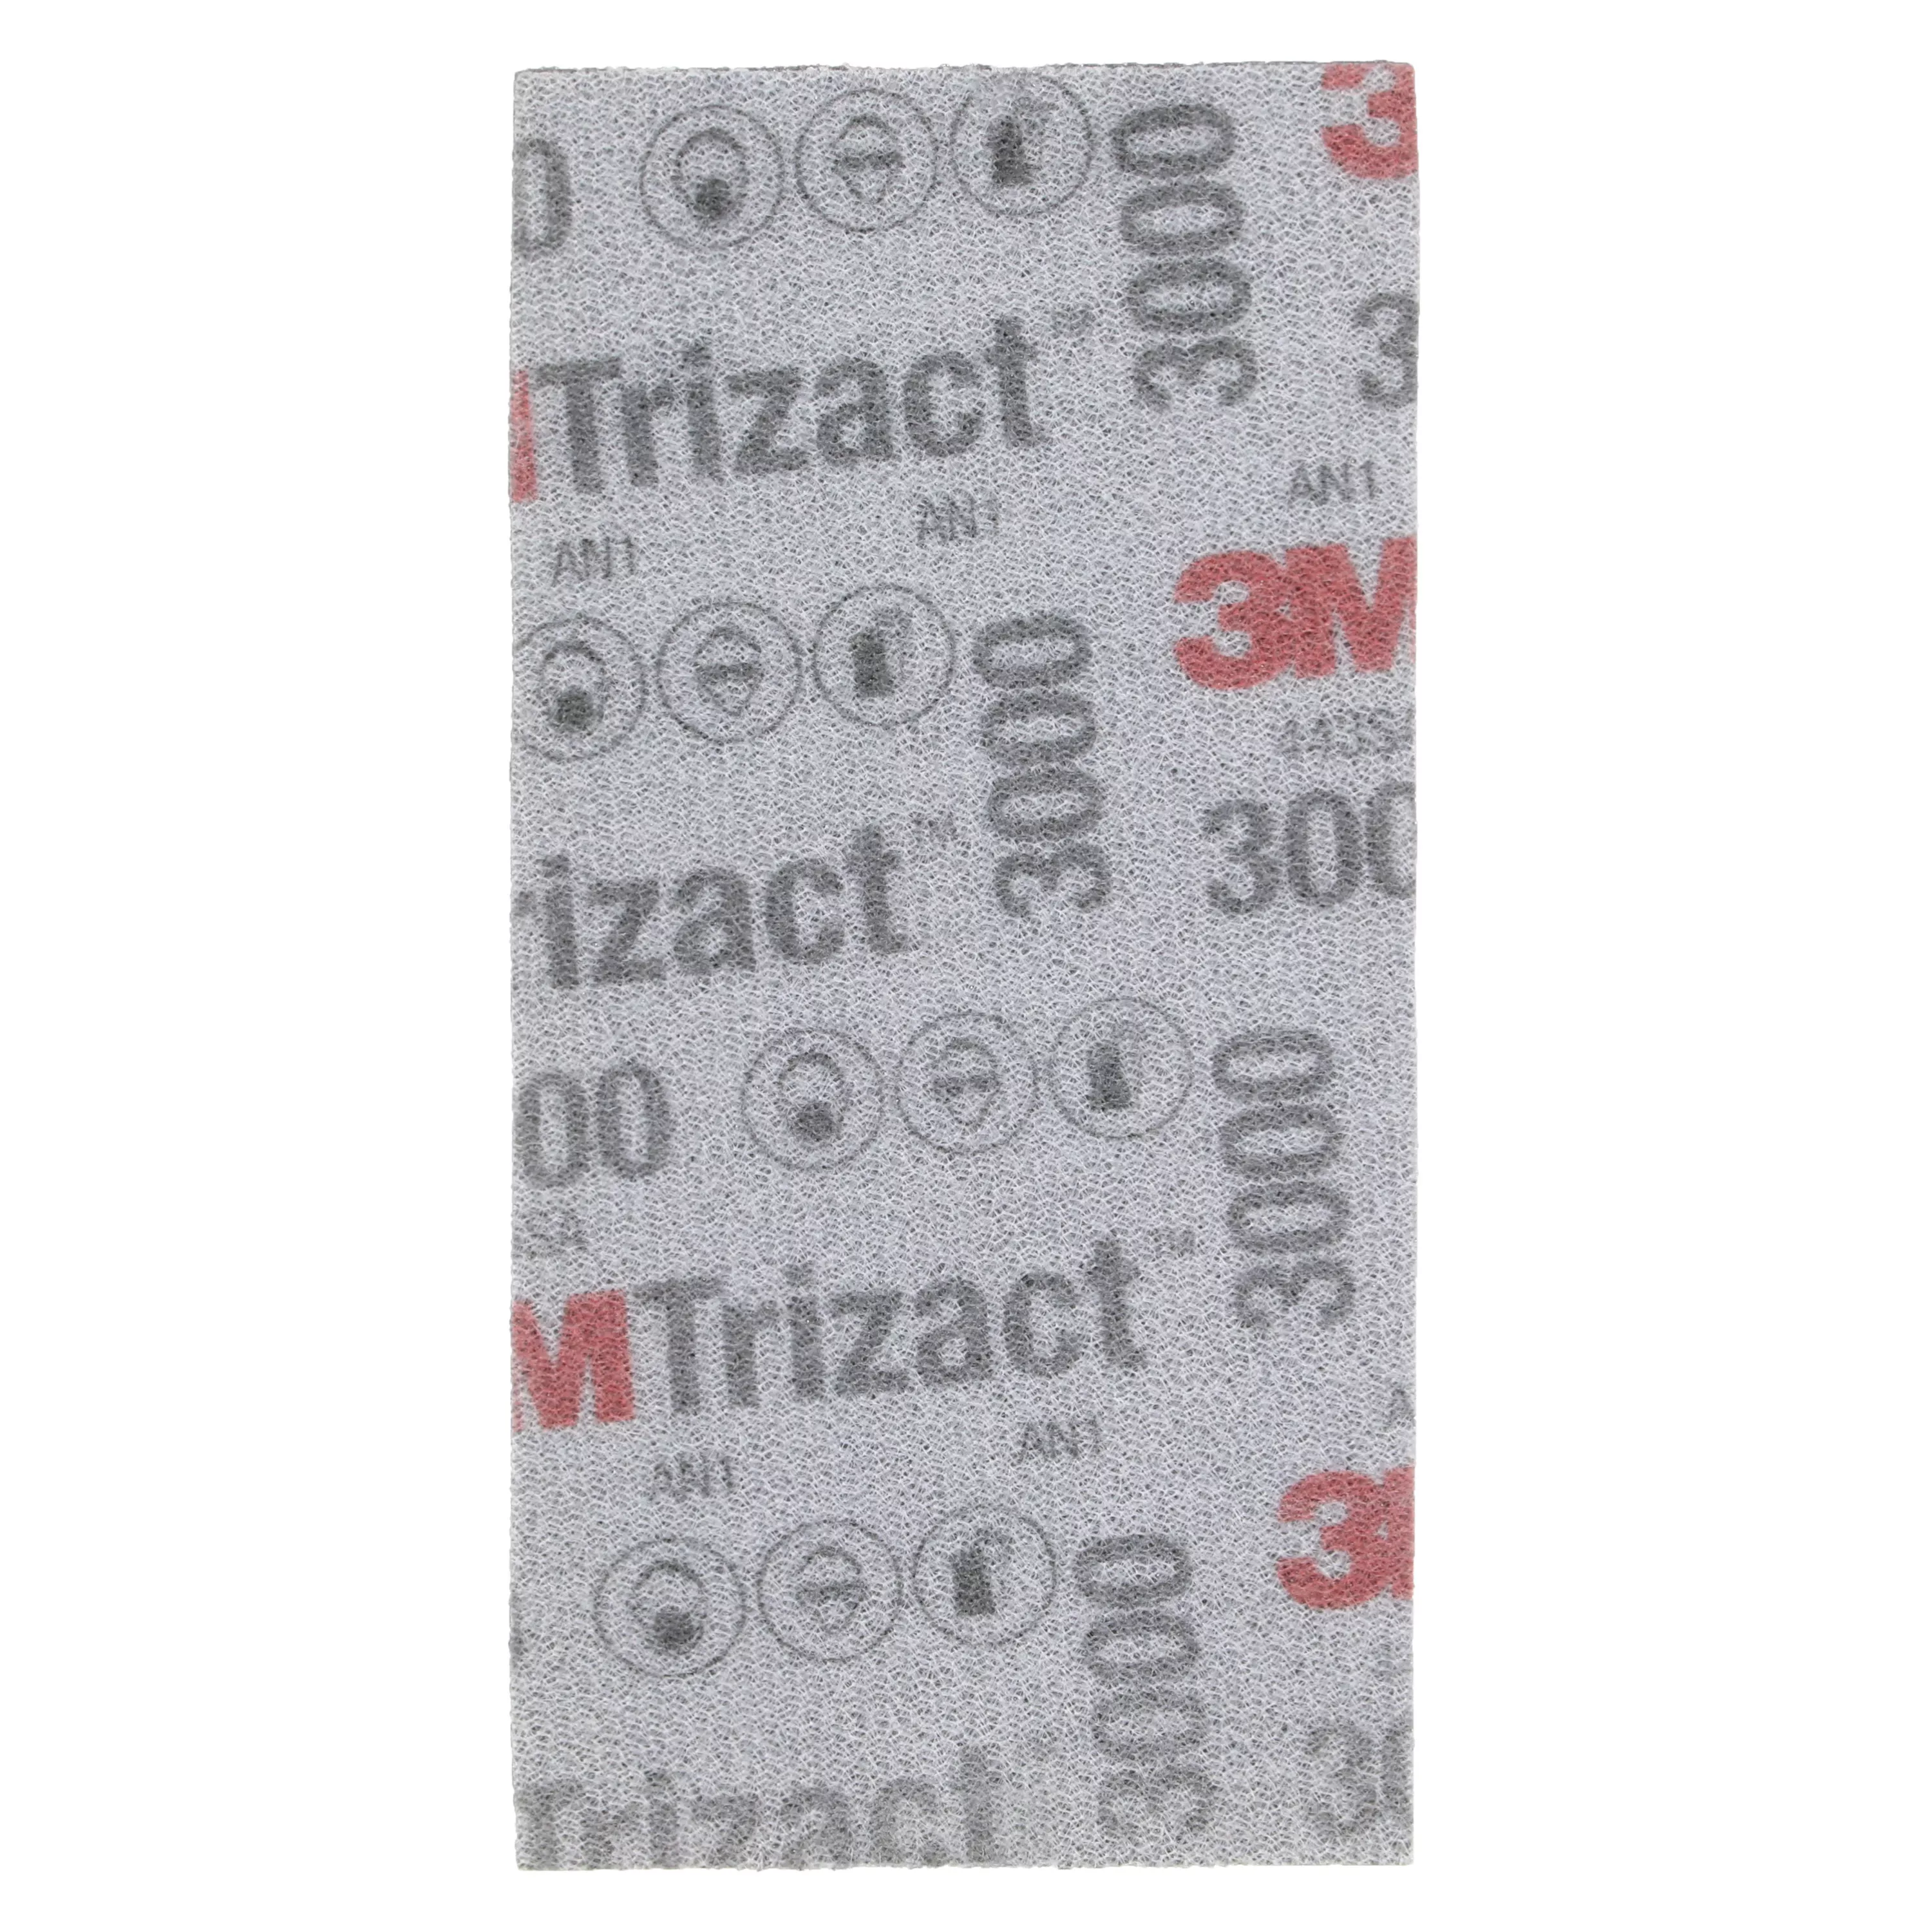 Product Number 443SA | 3M™ Trizact™ Hookit™ Foam Abrasive 3000 Sheet 443SA